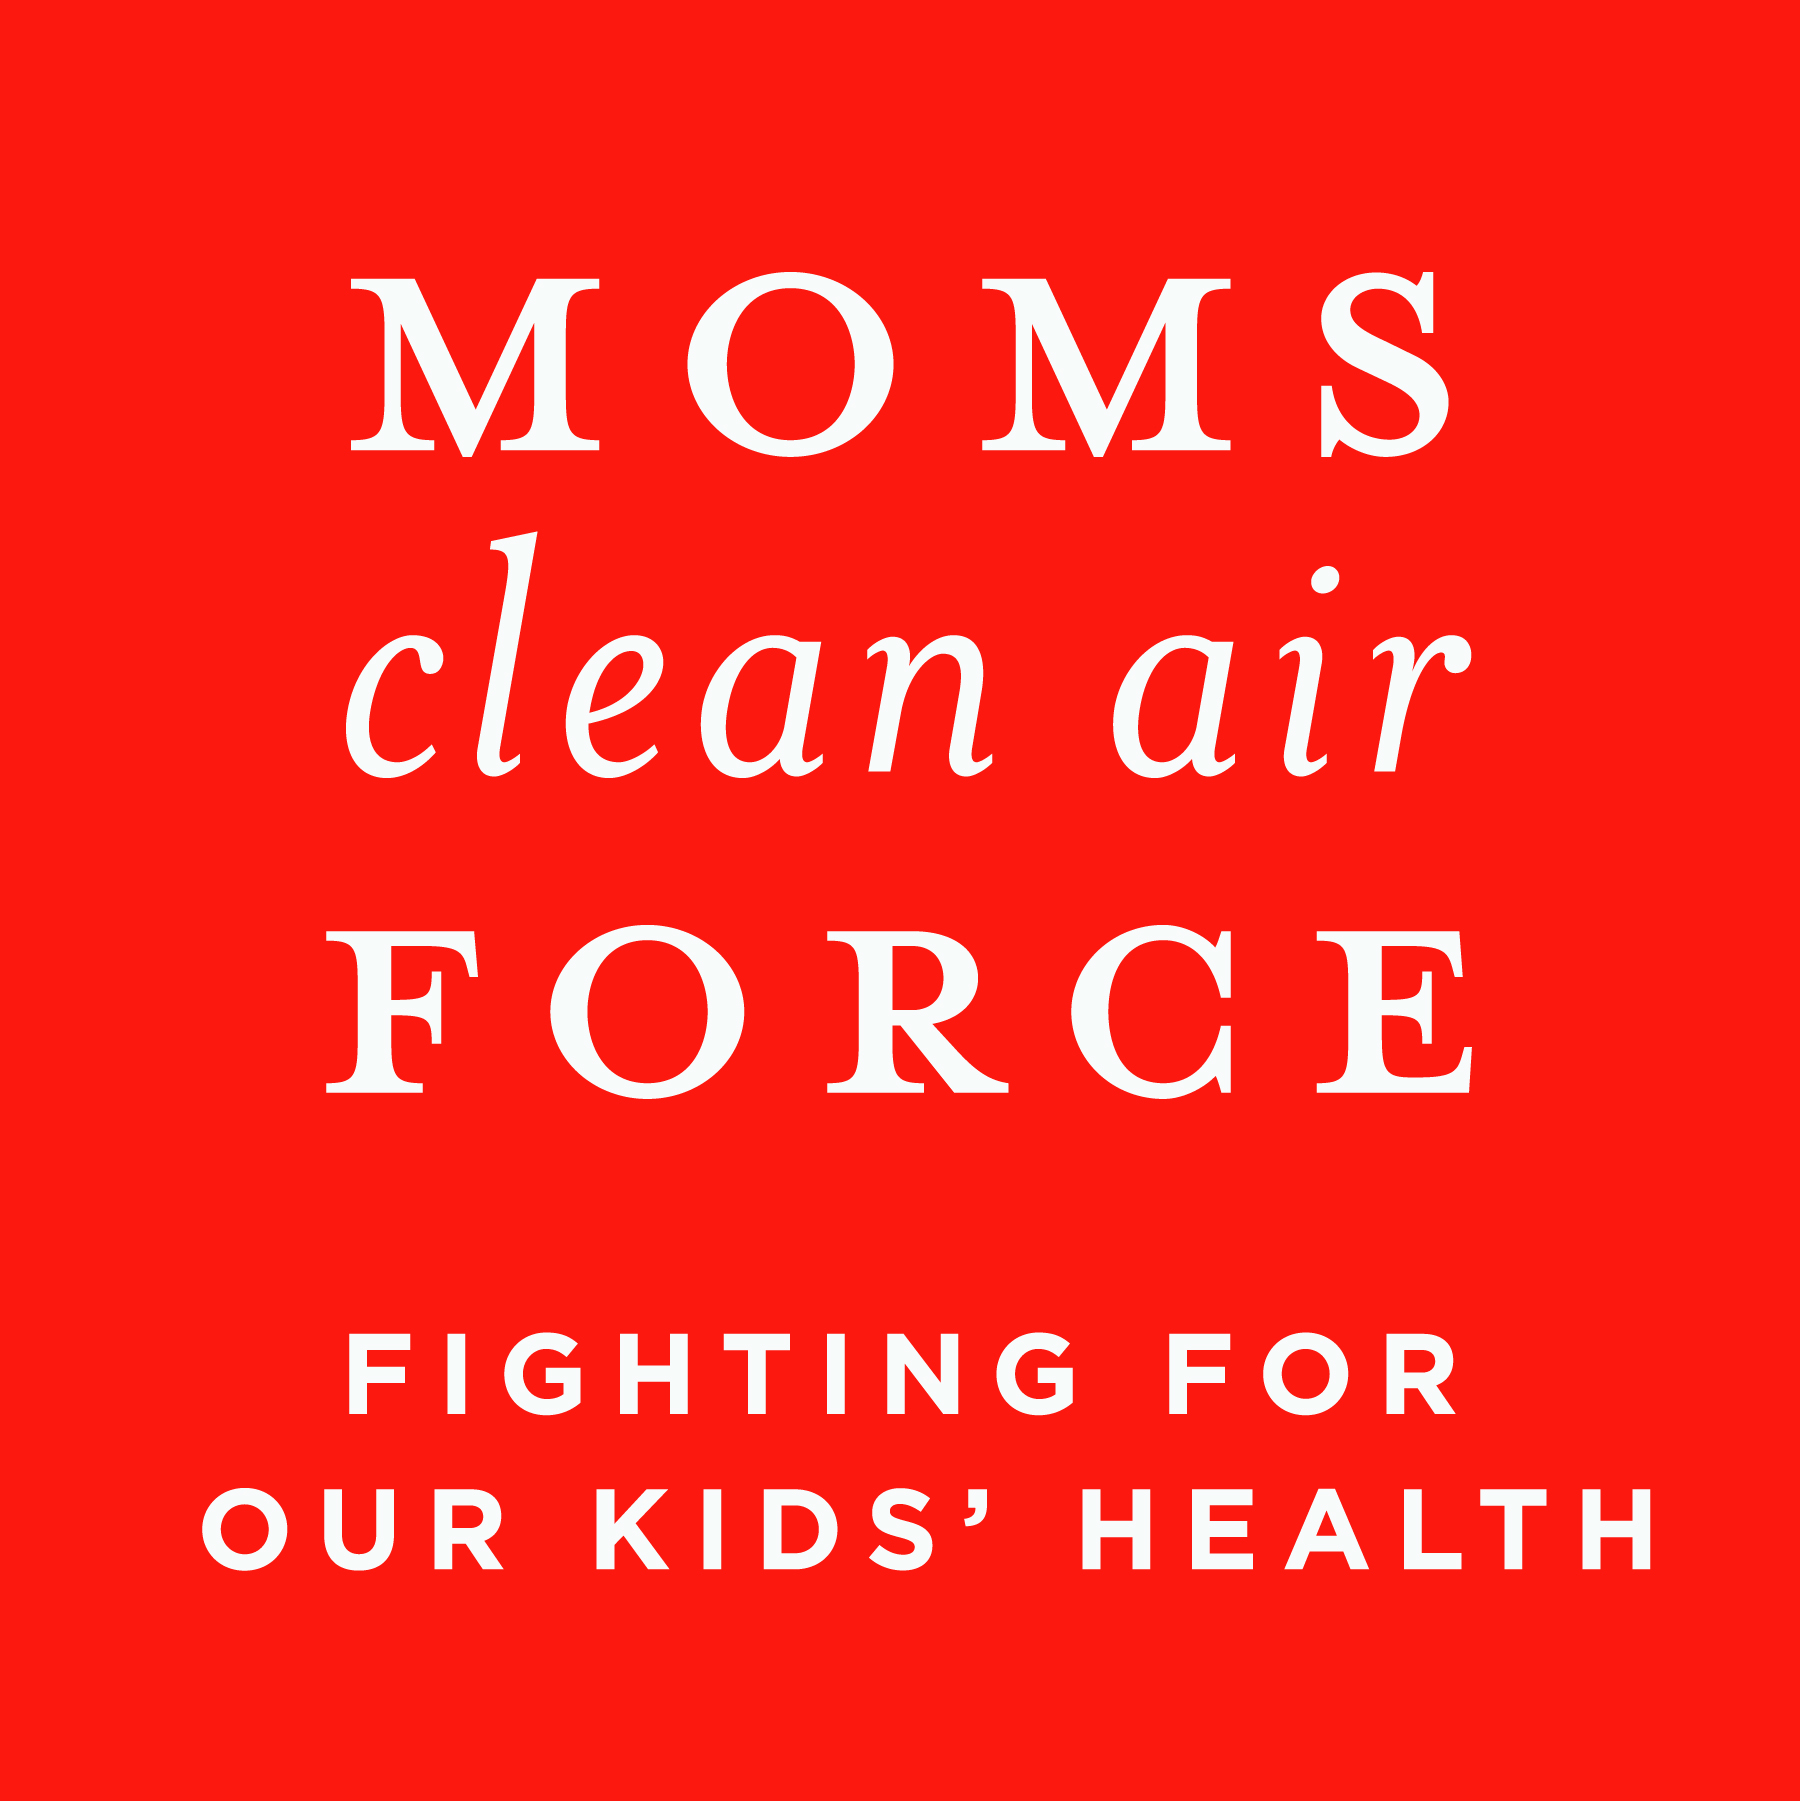 Moms clean air Force